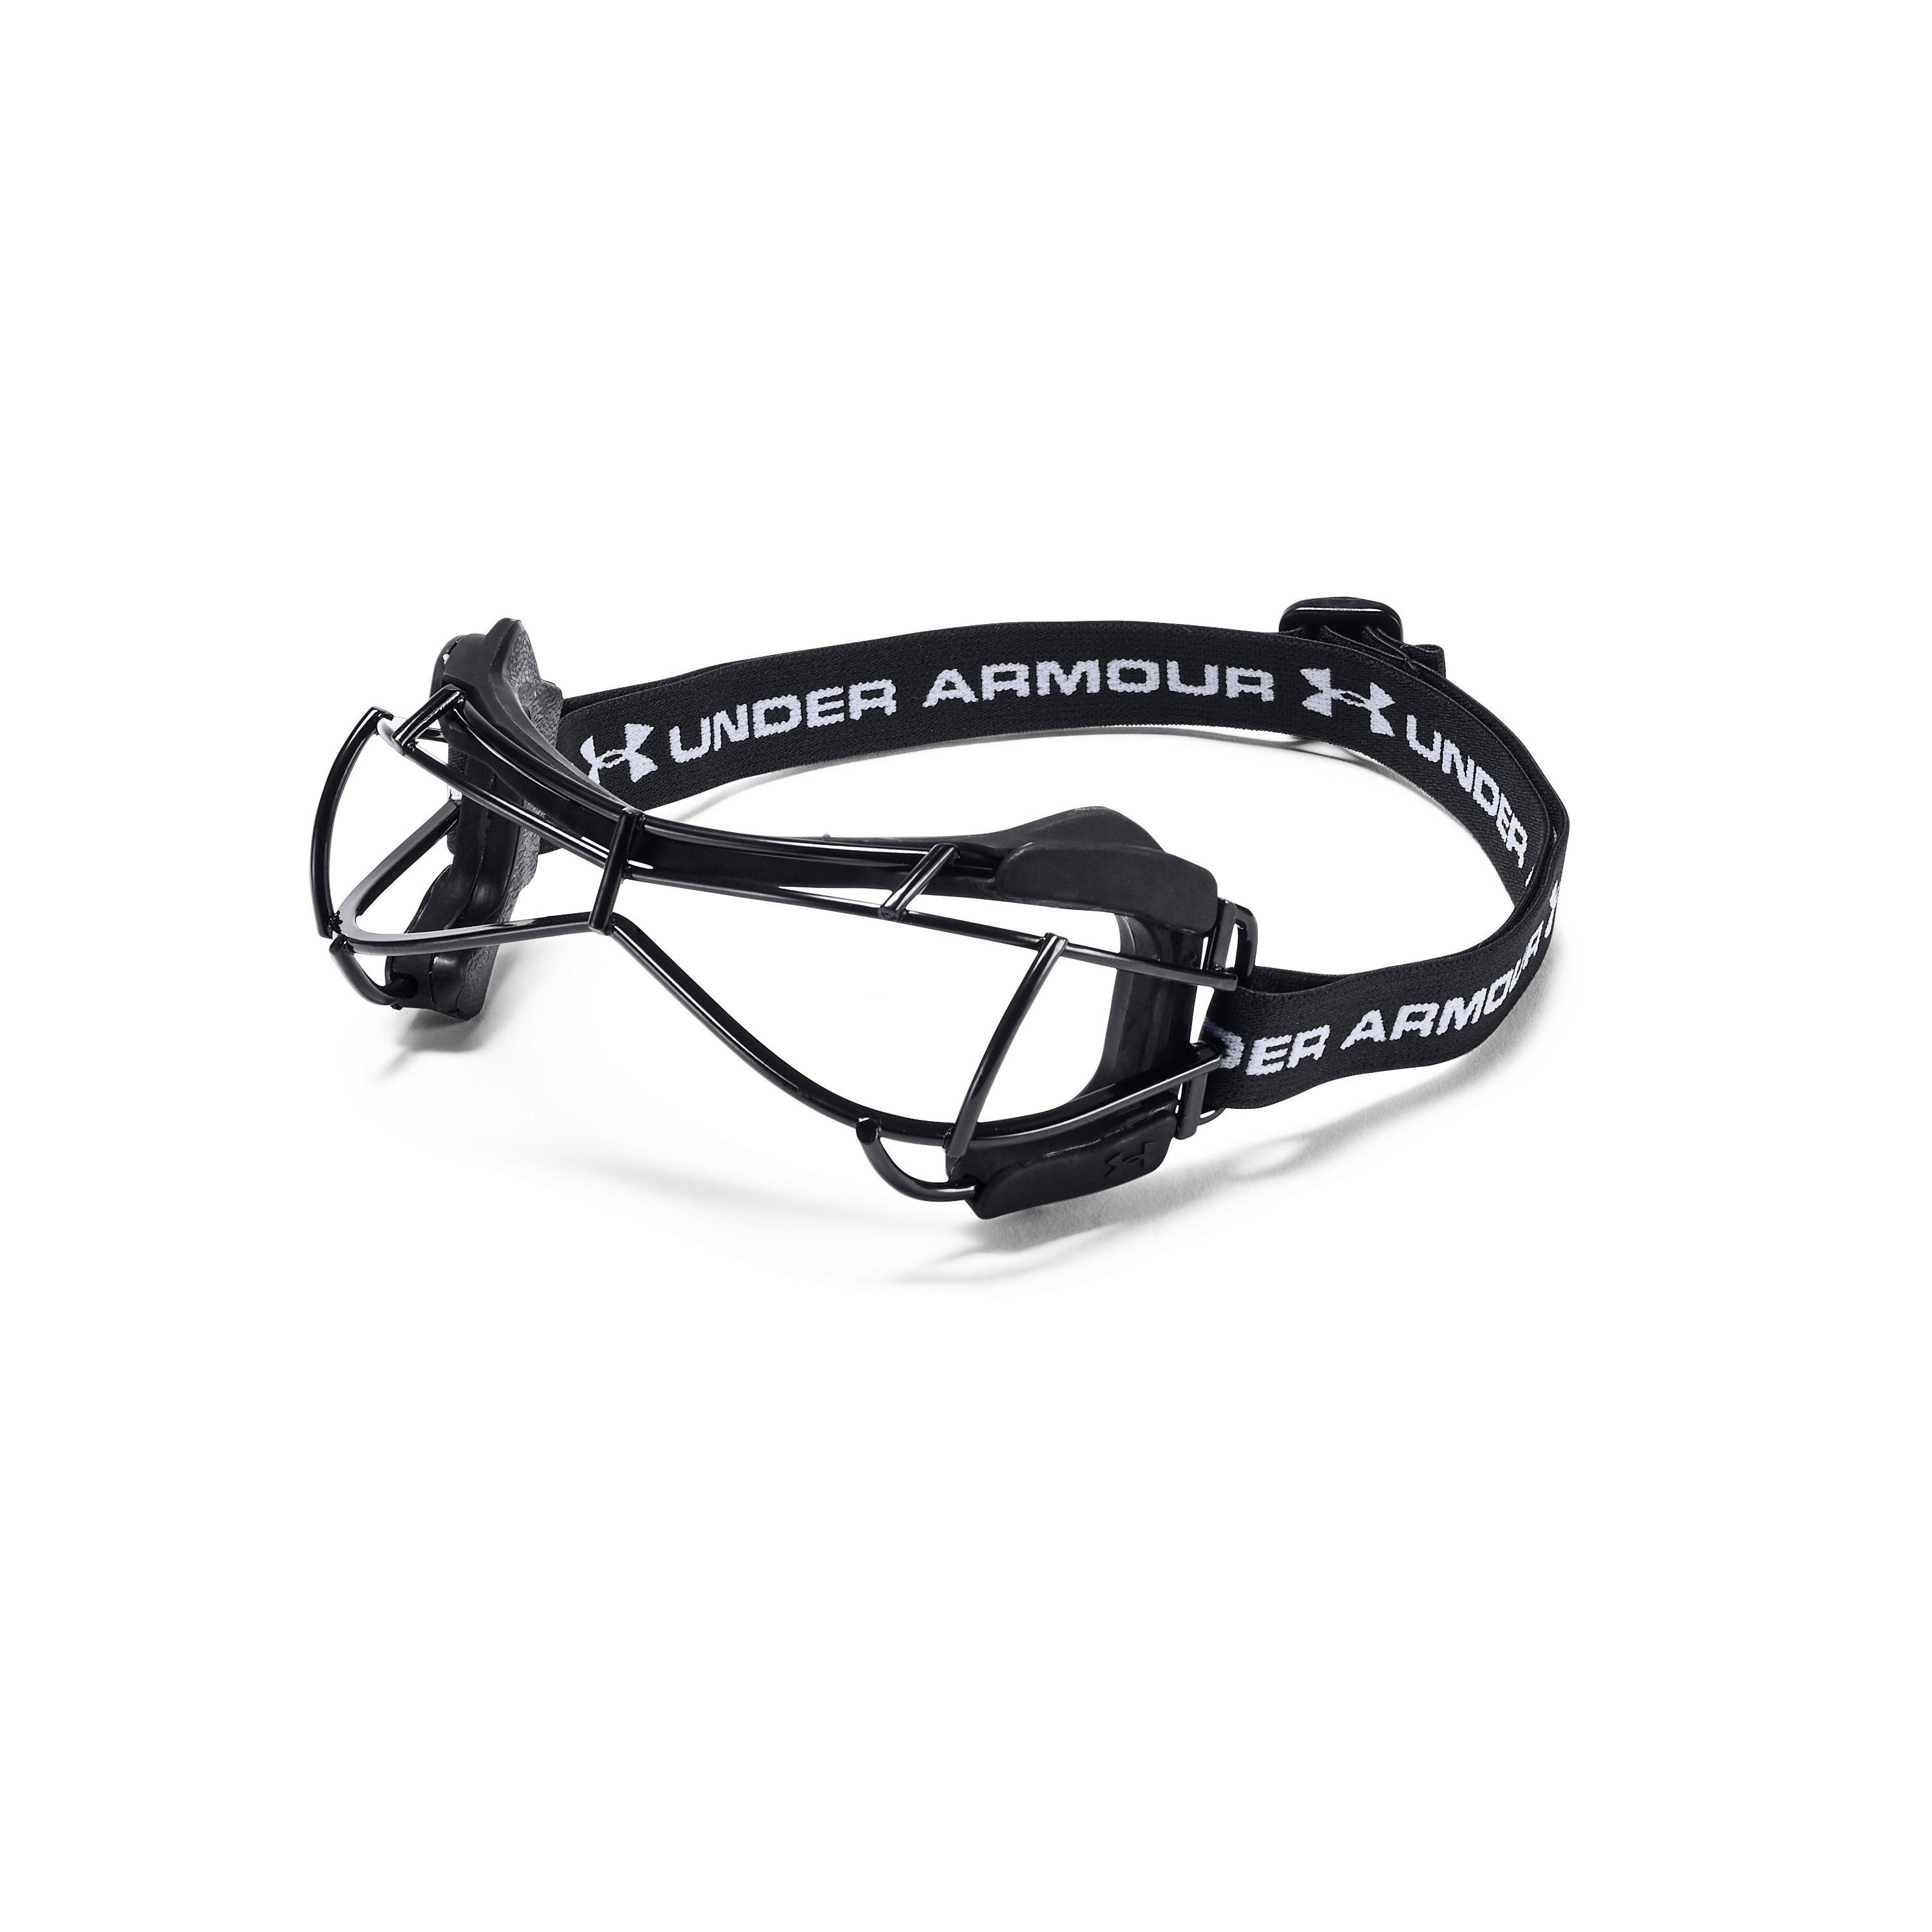 Under Armour Women's Ua Illusion 2 Lacrosse Goggles in Black /Black (Black)  - Lyst